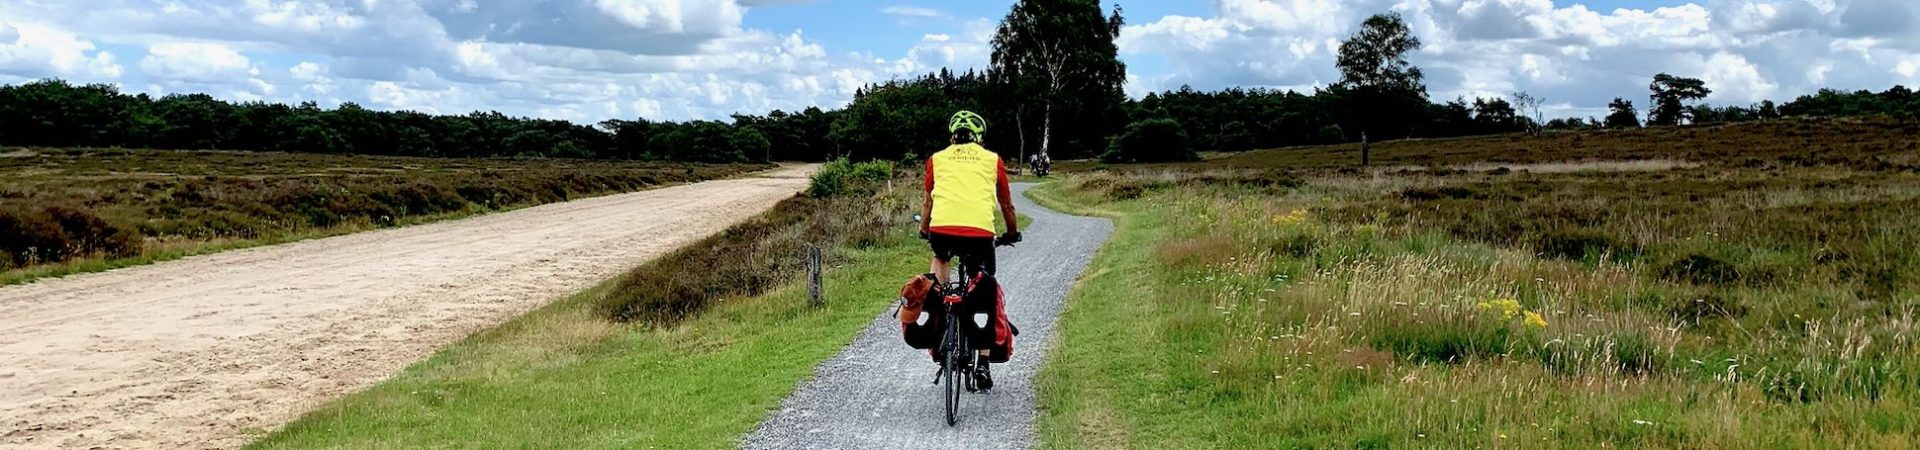 Fietsroute, fietsblog, review, rondje Drenthe